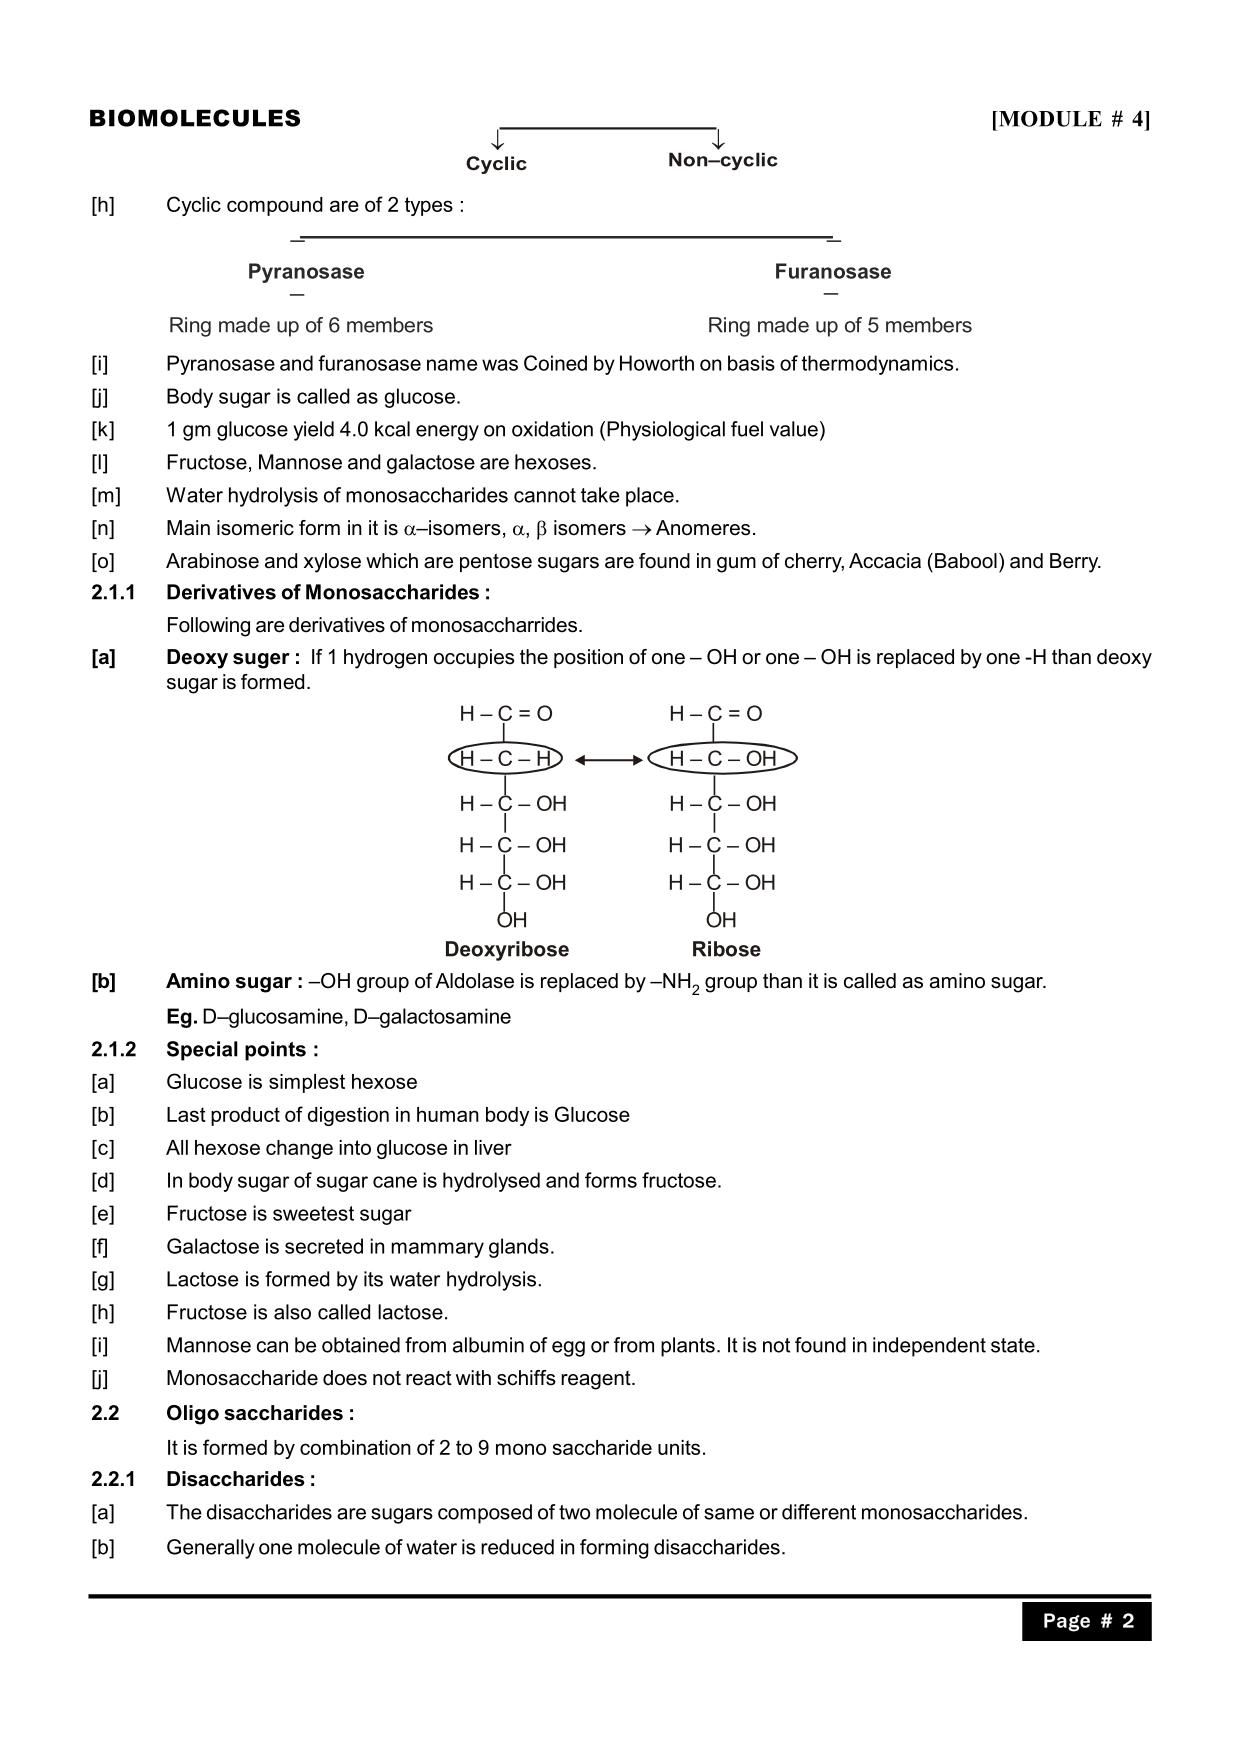 Class 12 Biomolecules Notes: Classification